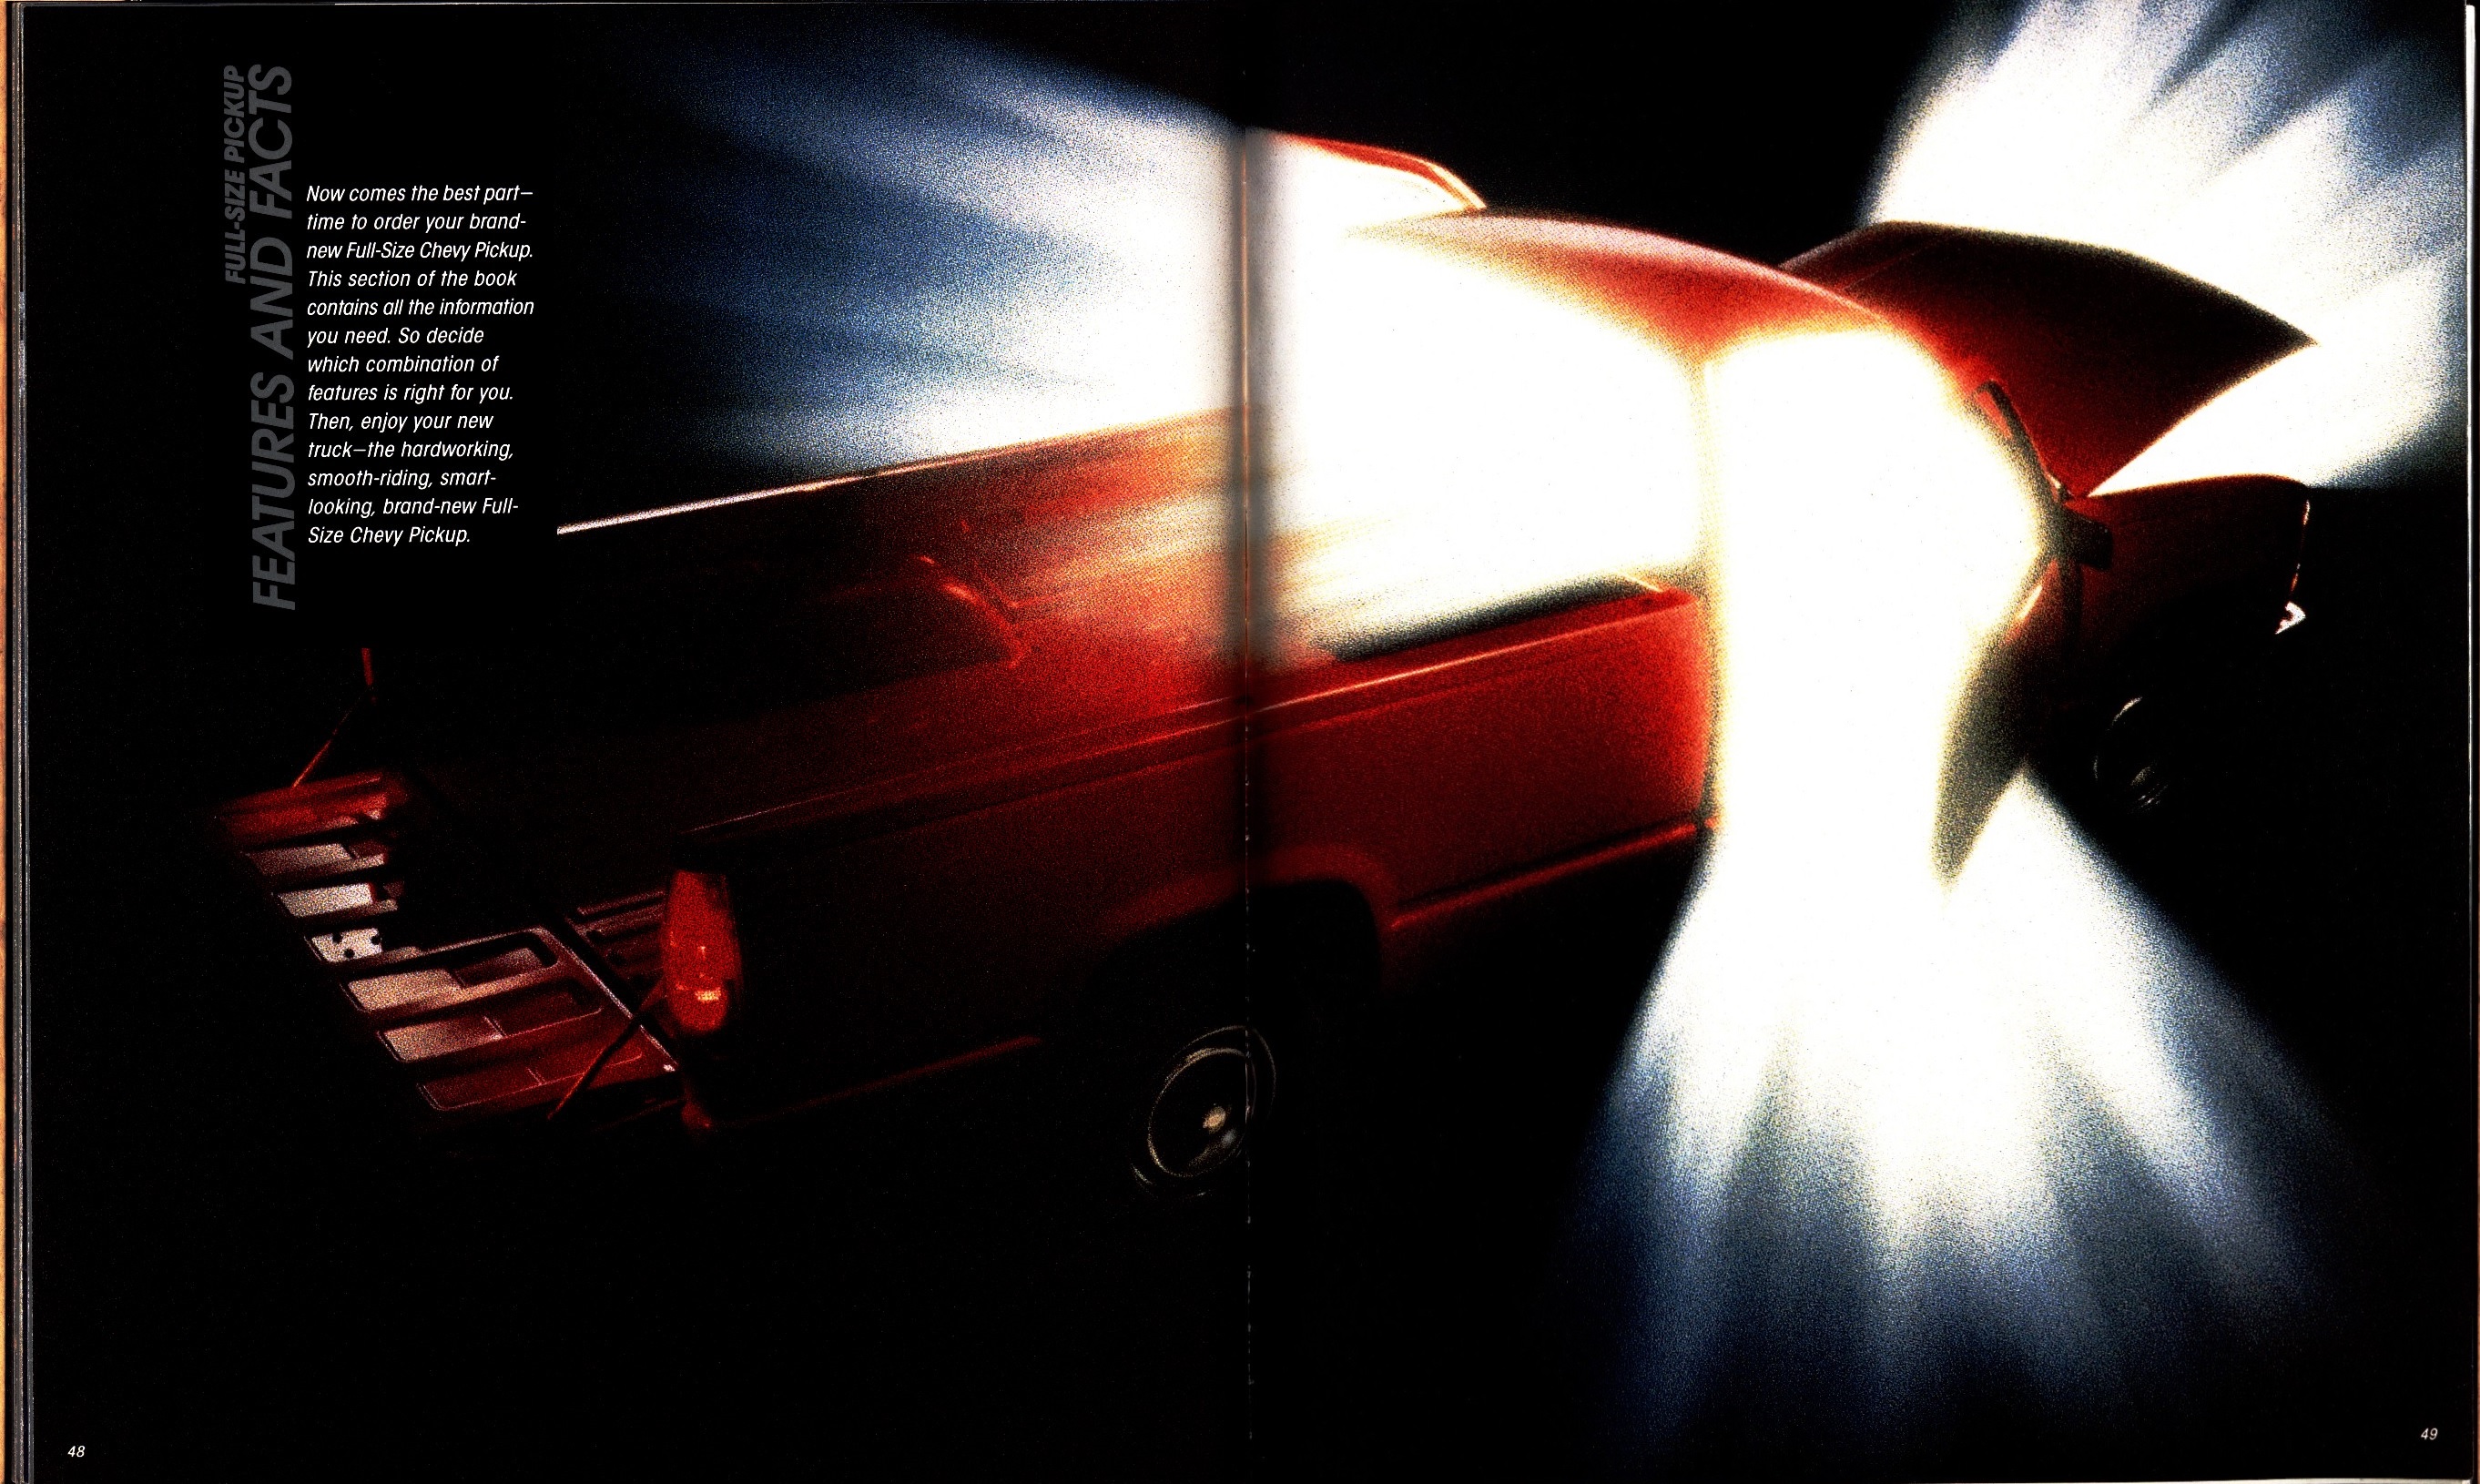 1988 Chevrolet Full Size Pickup Brochure 48-49